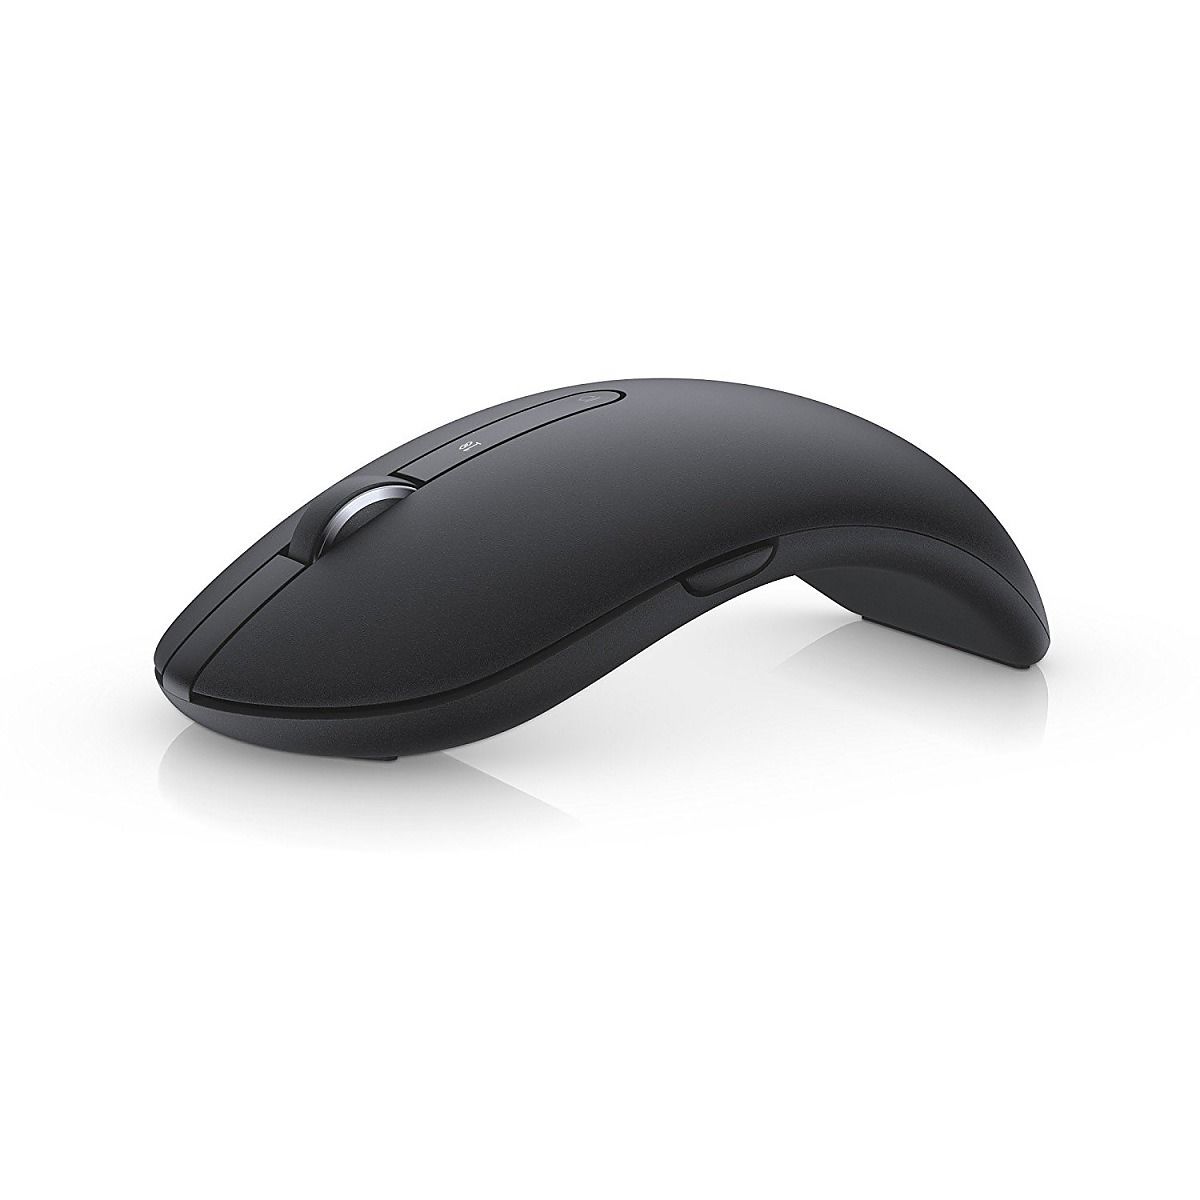 Dell Premier Wireless Mouse